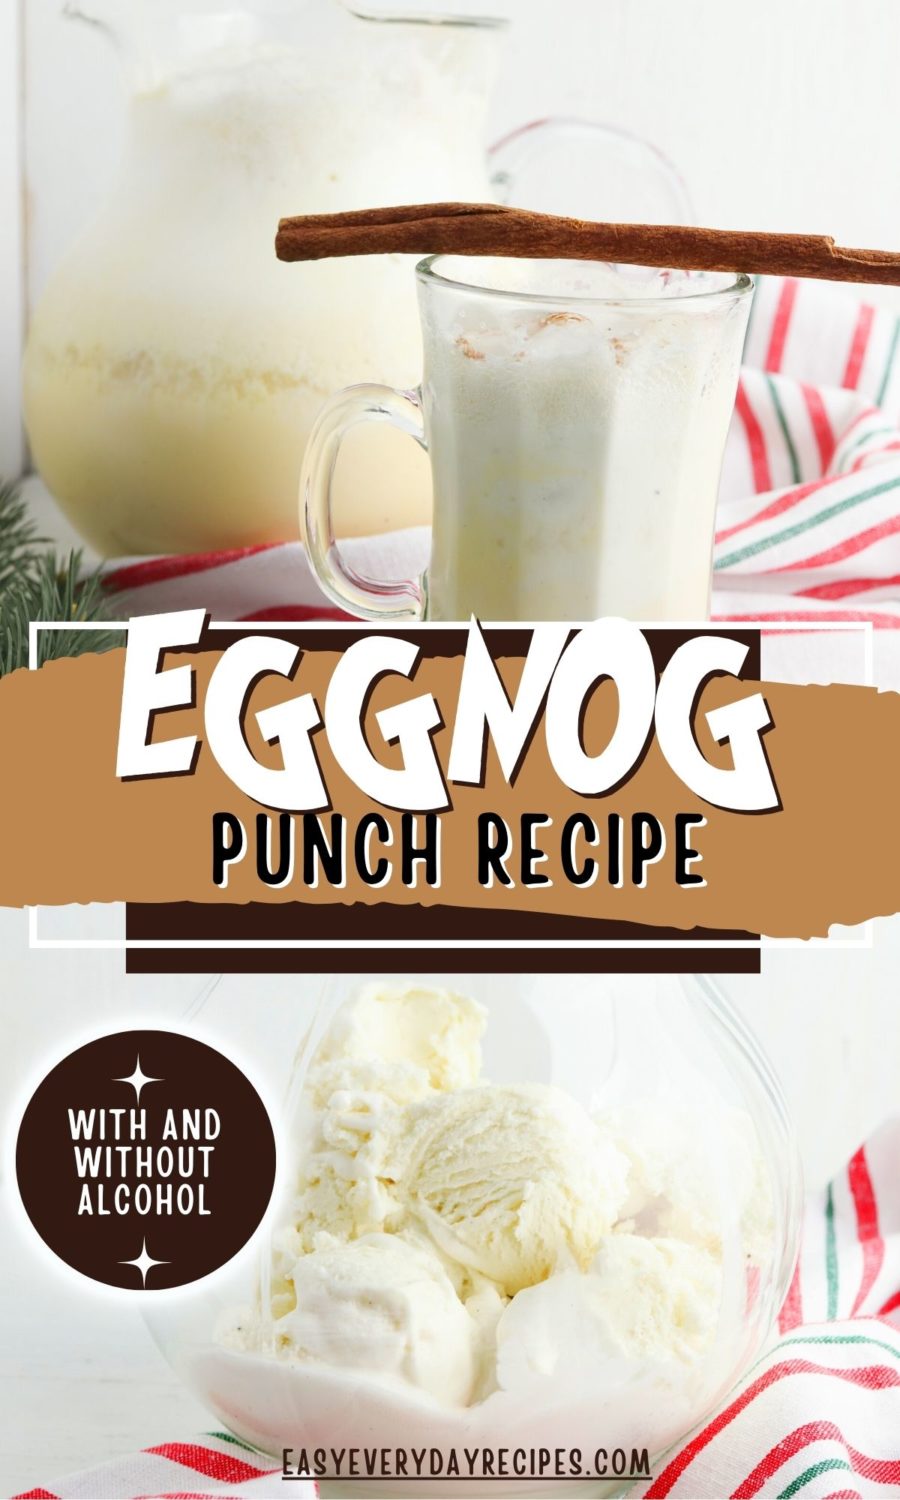 Eggnog punch recipe.